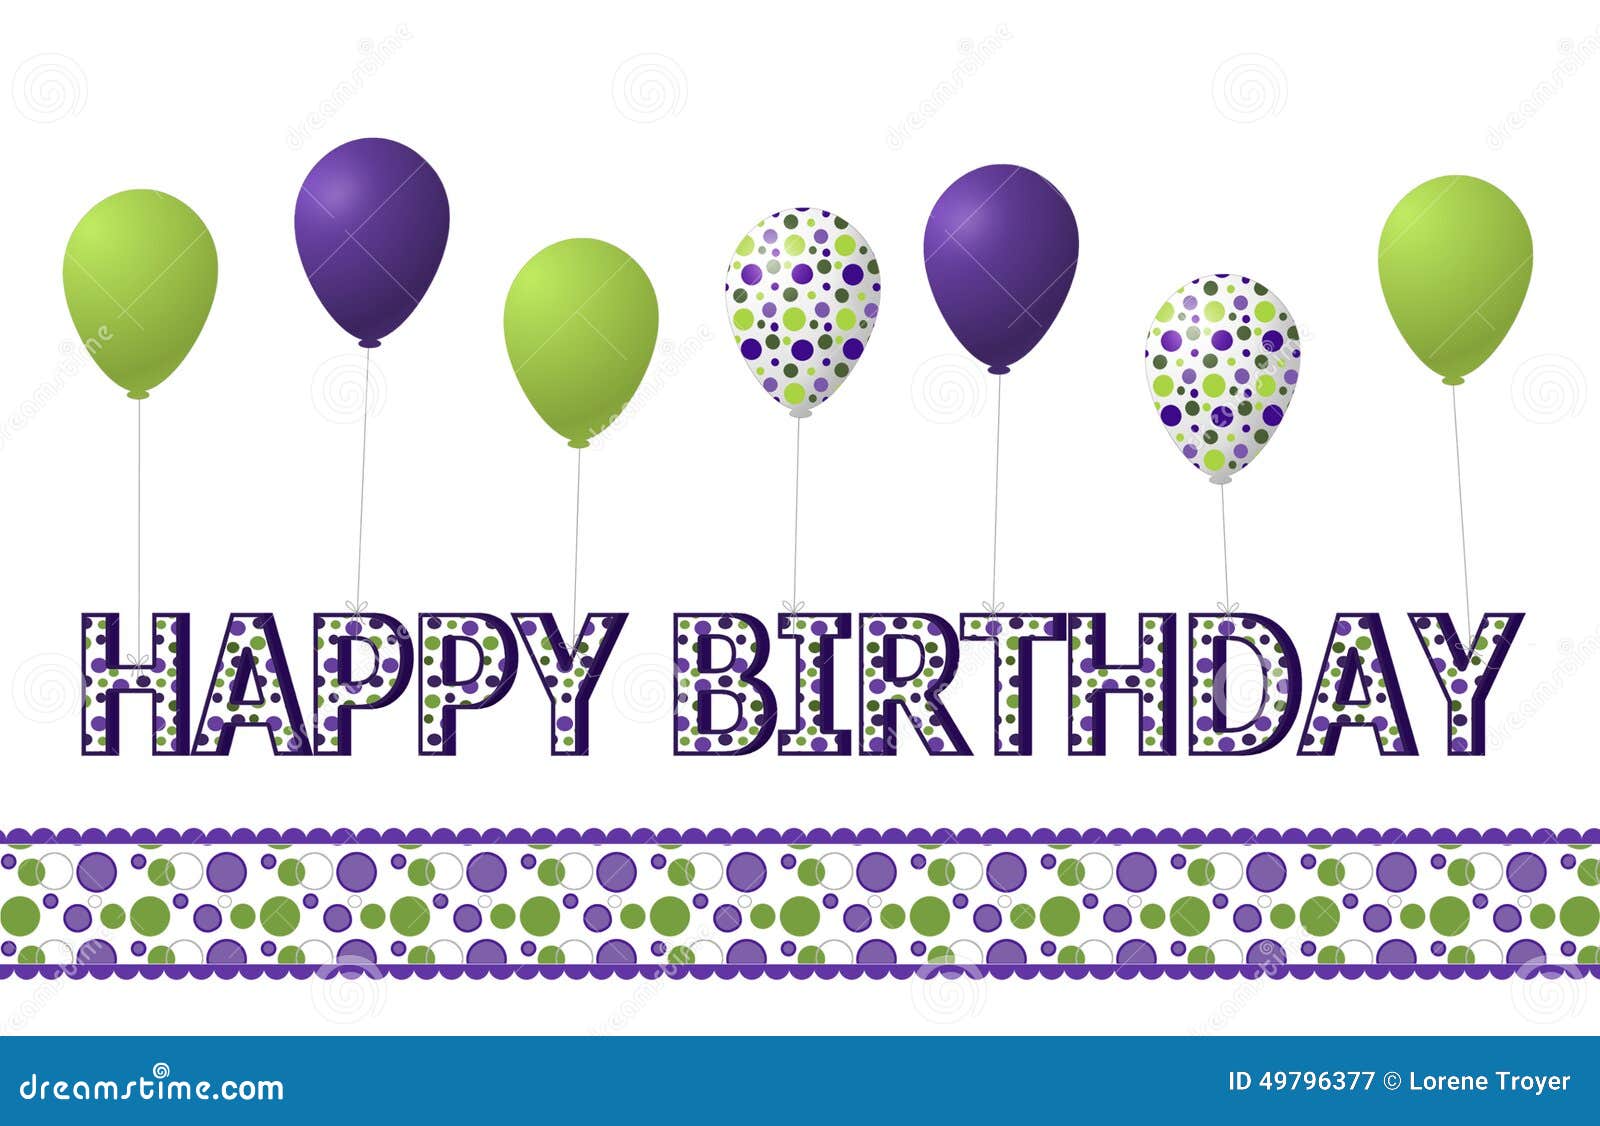 Happy Birthday PurpleGreen